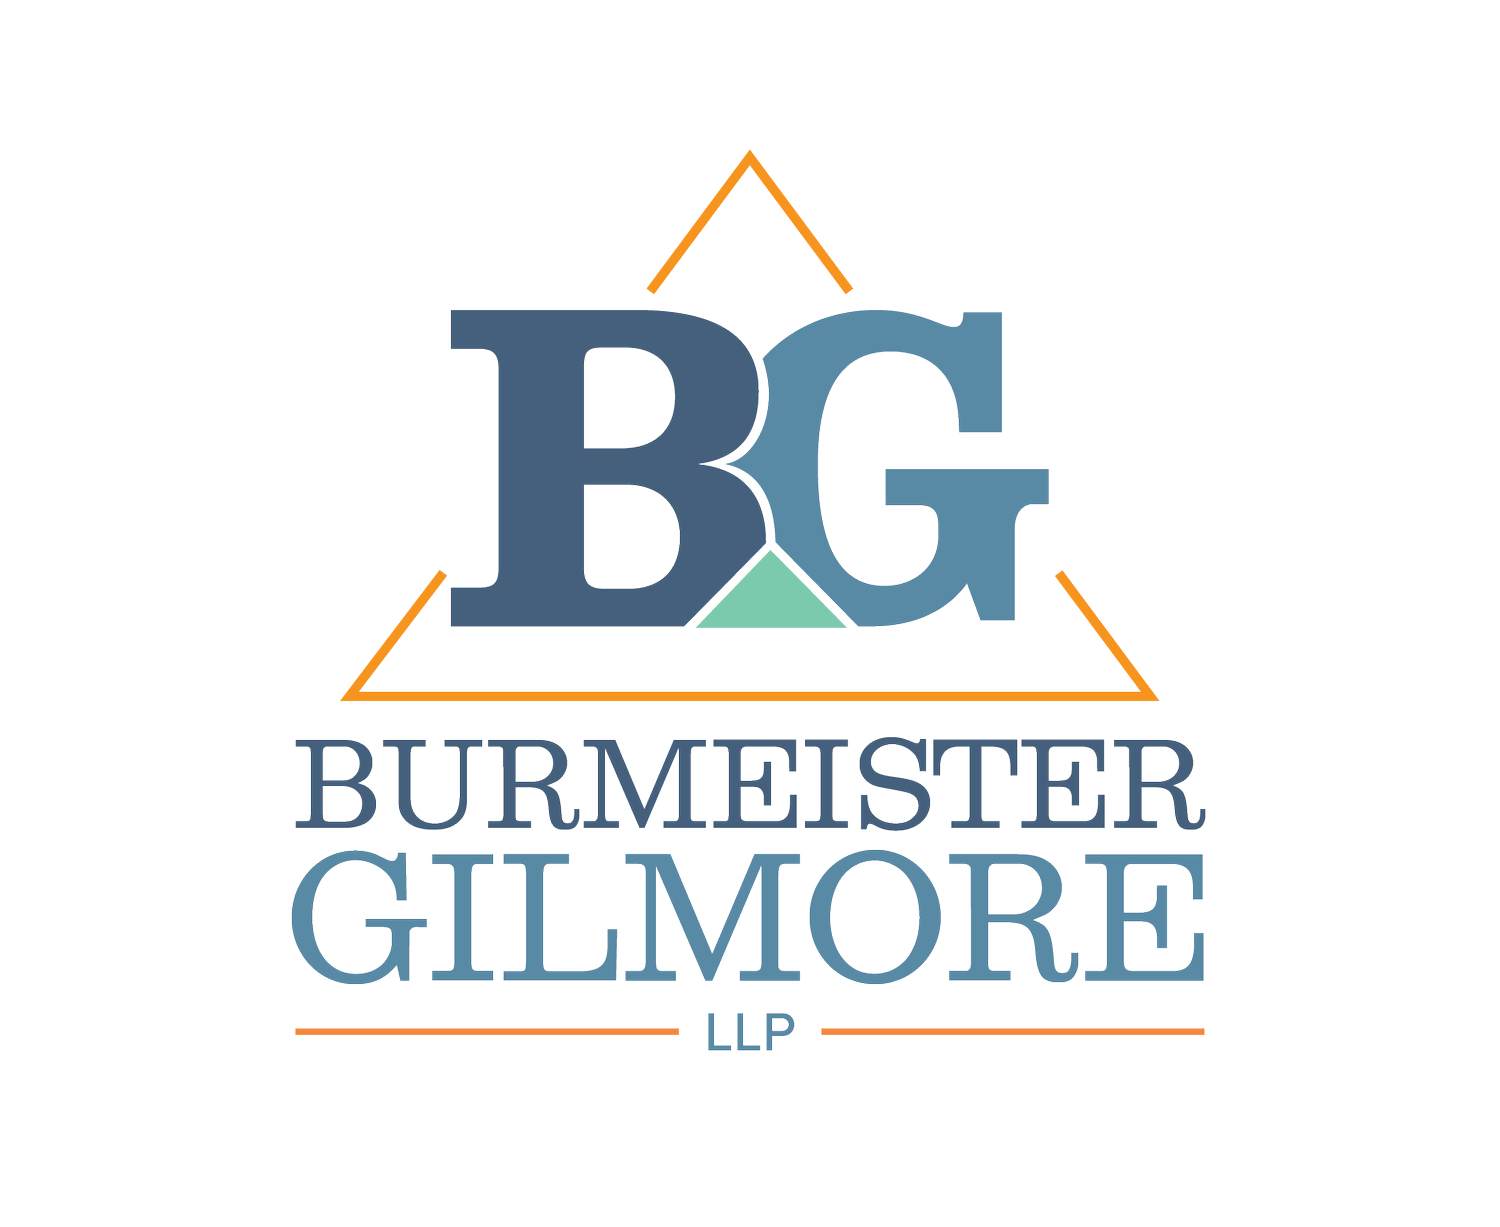 Burmeister Gilmore LLP - Personal Injury Attorneys